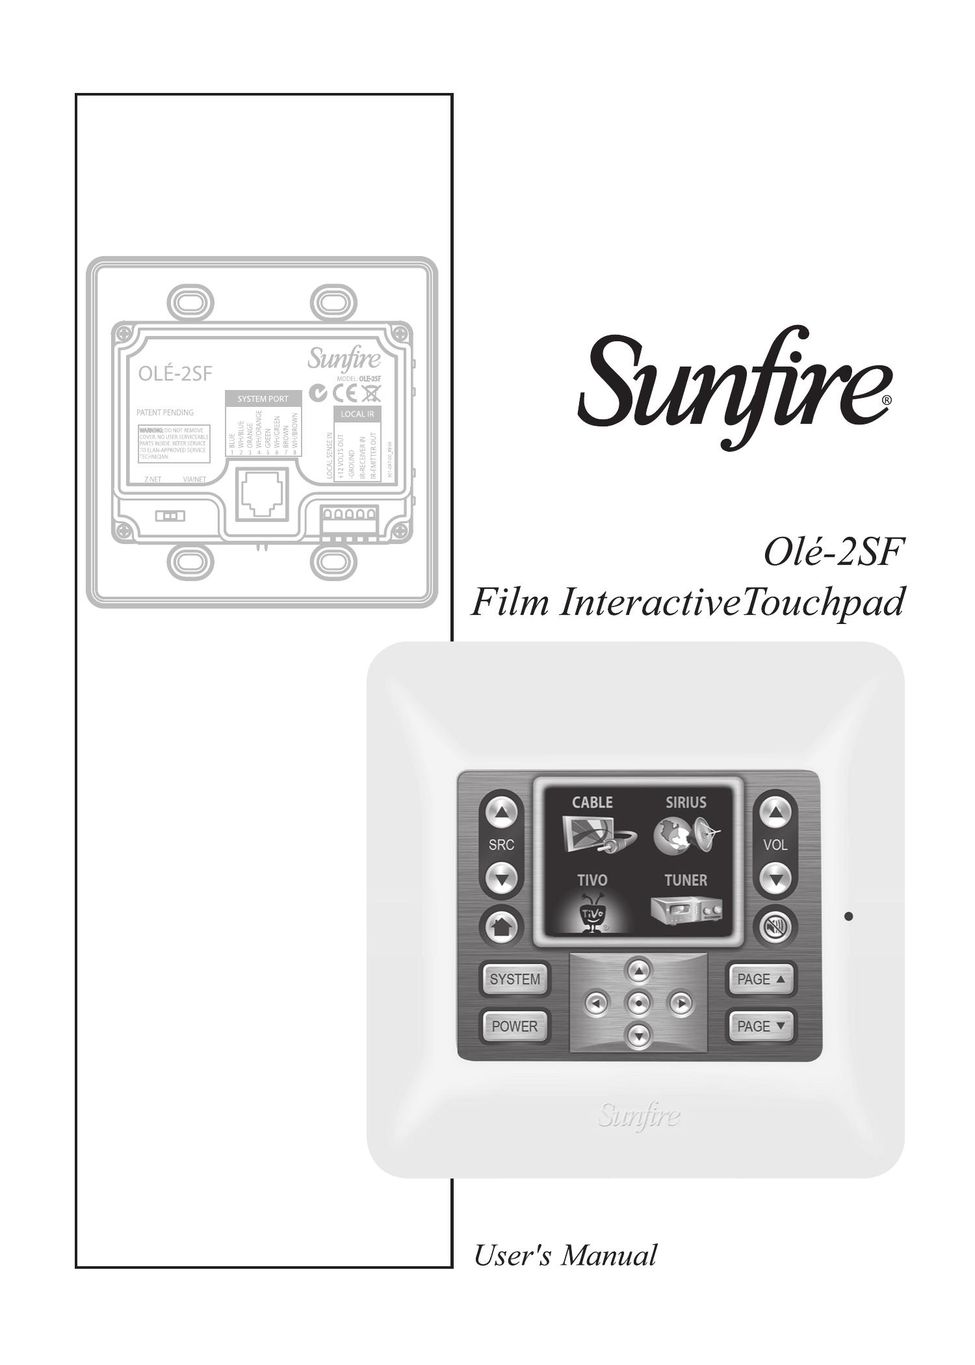 Sunfire OLE-2SF Indoor Furnishings User Manual